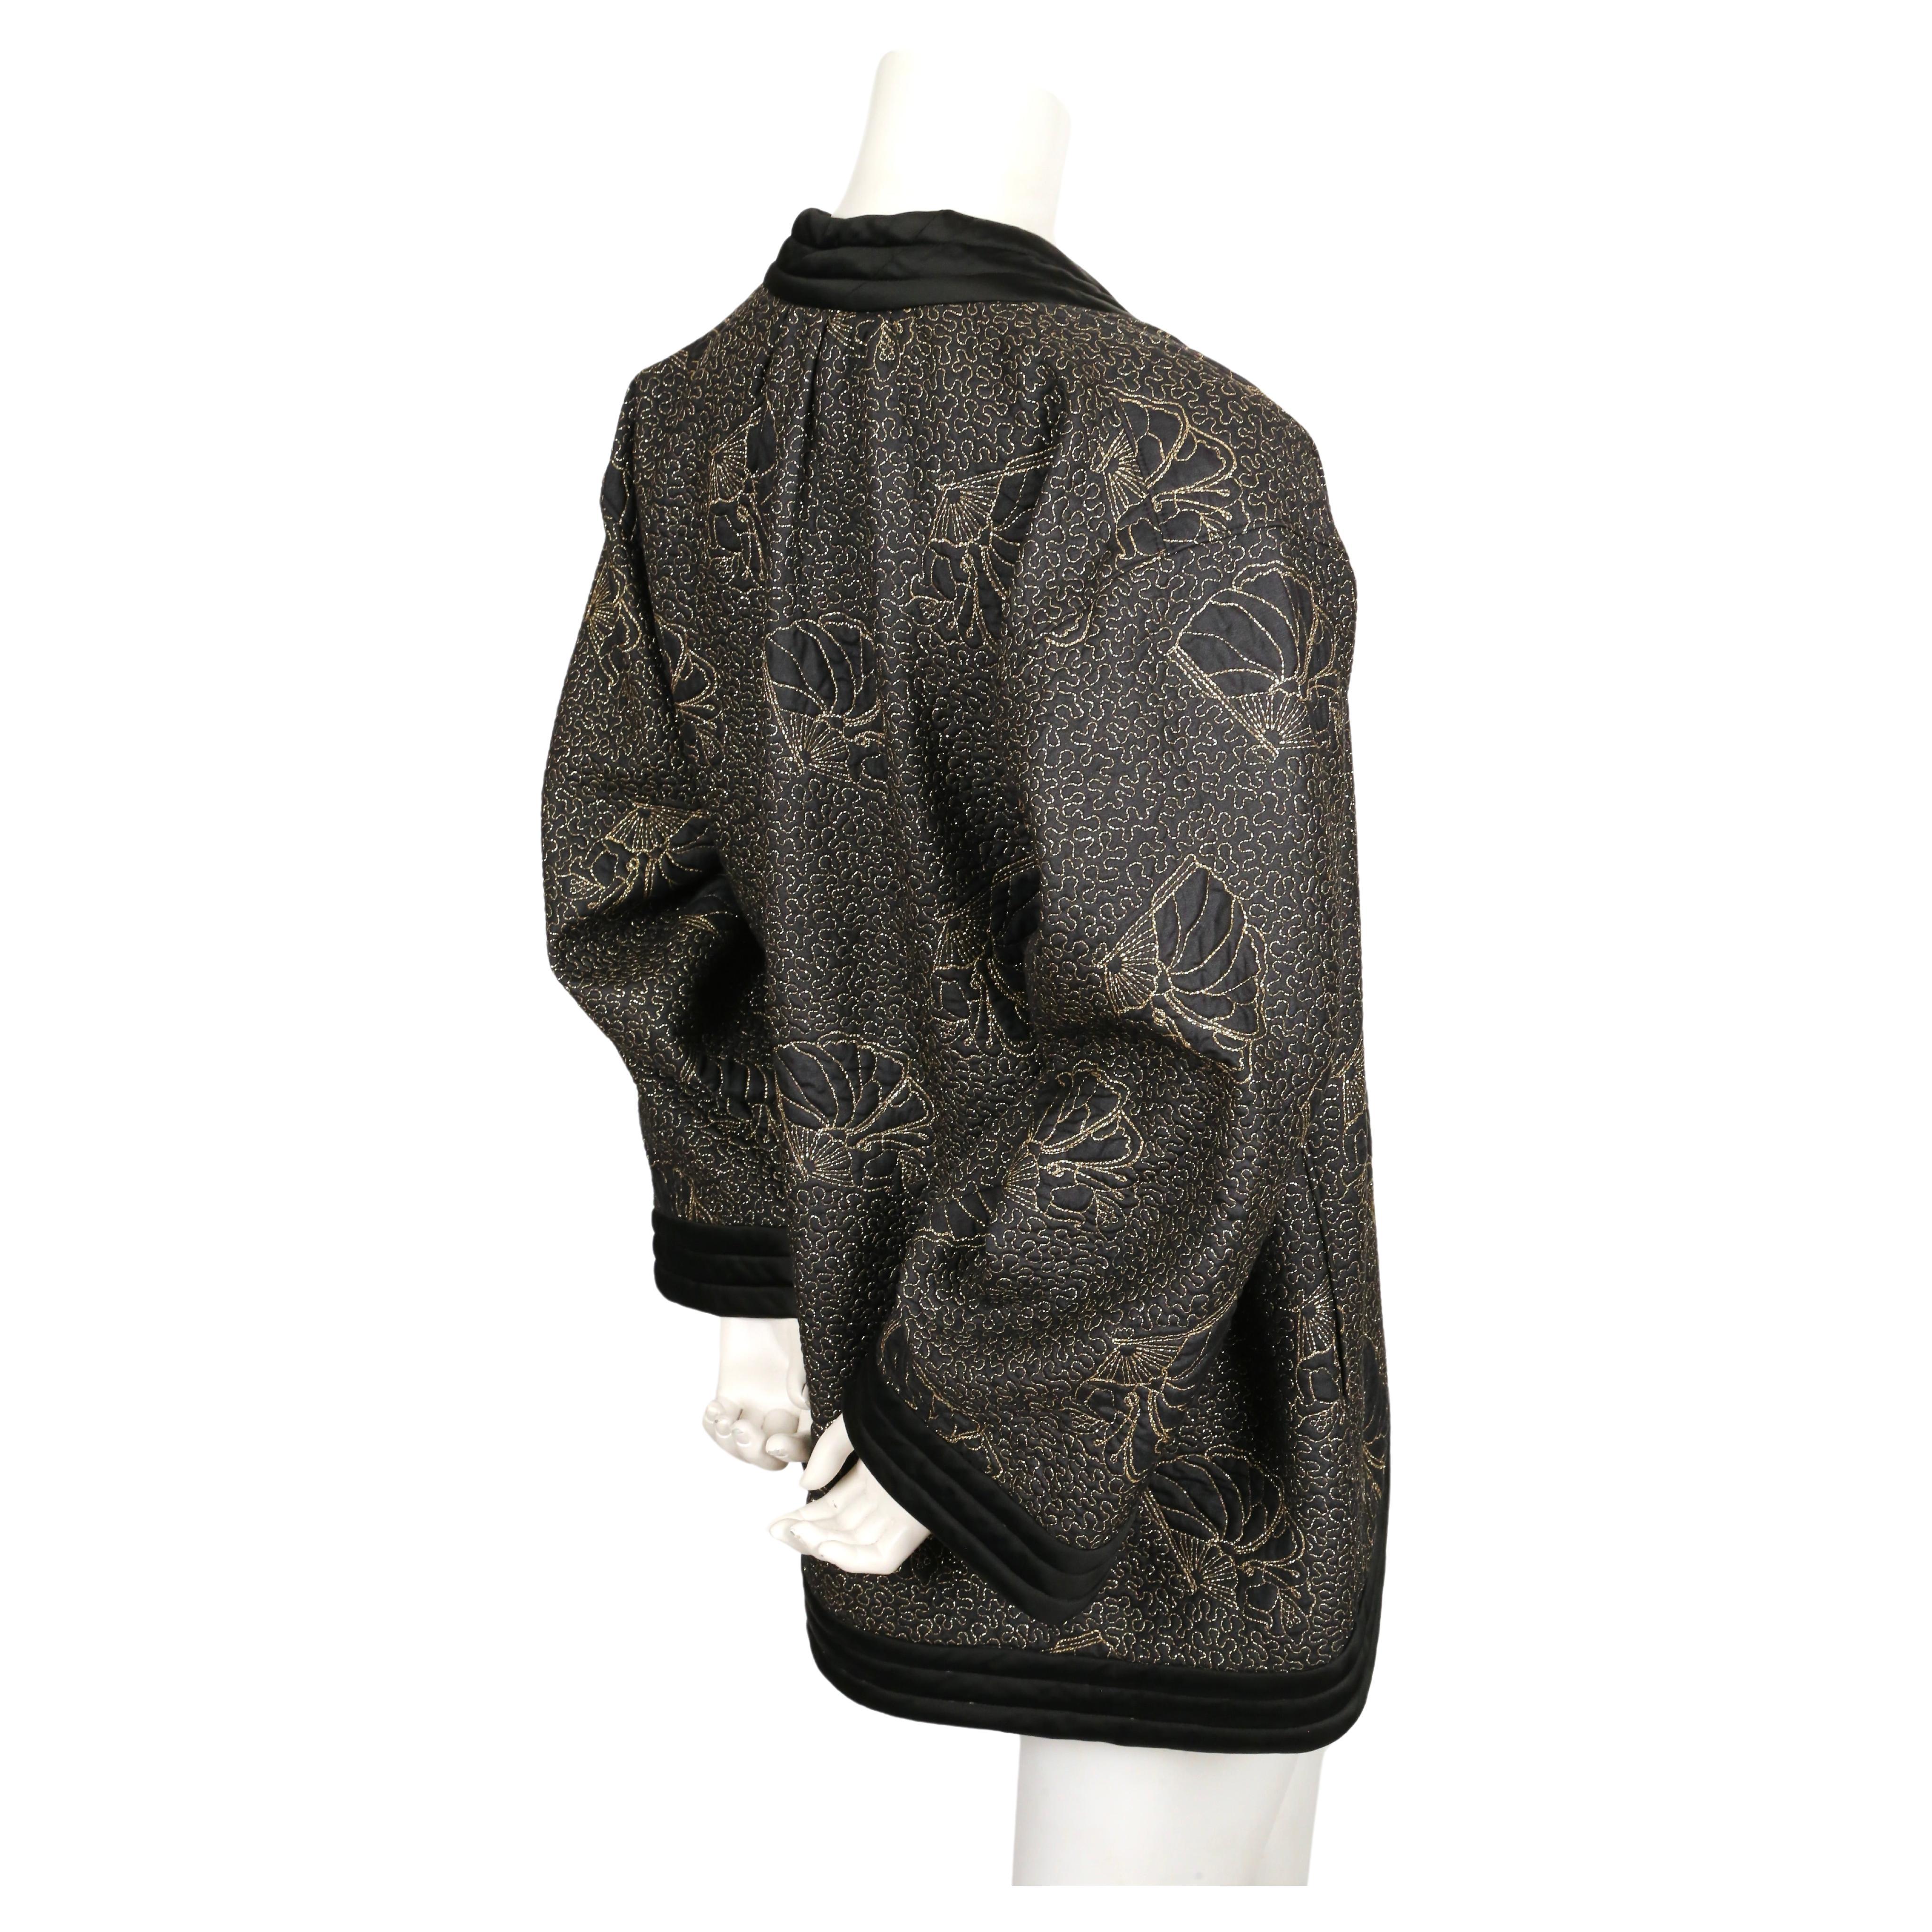 1979 YVES SAINT LAURENT black satin kimono jacket with gold seashell embroidery For Sale 2